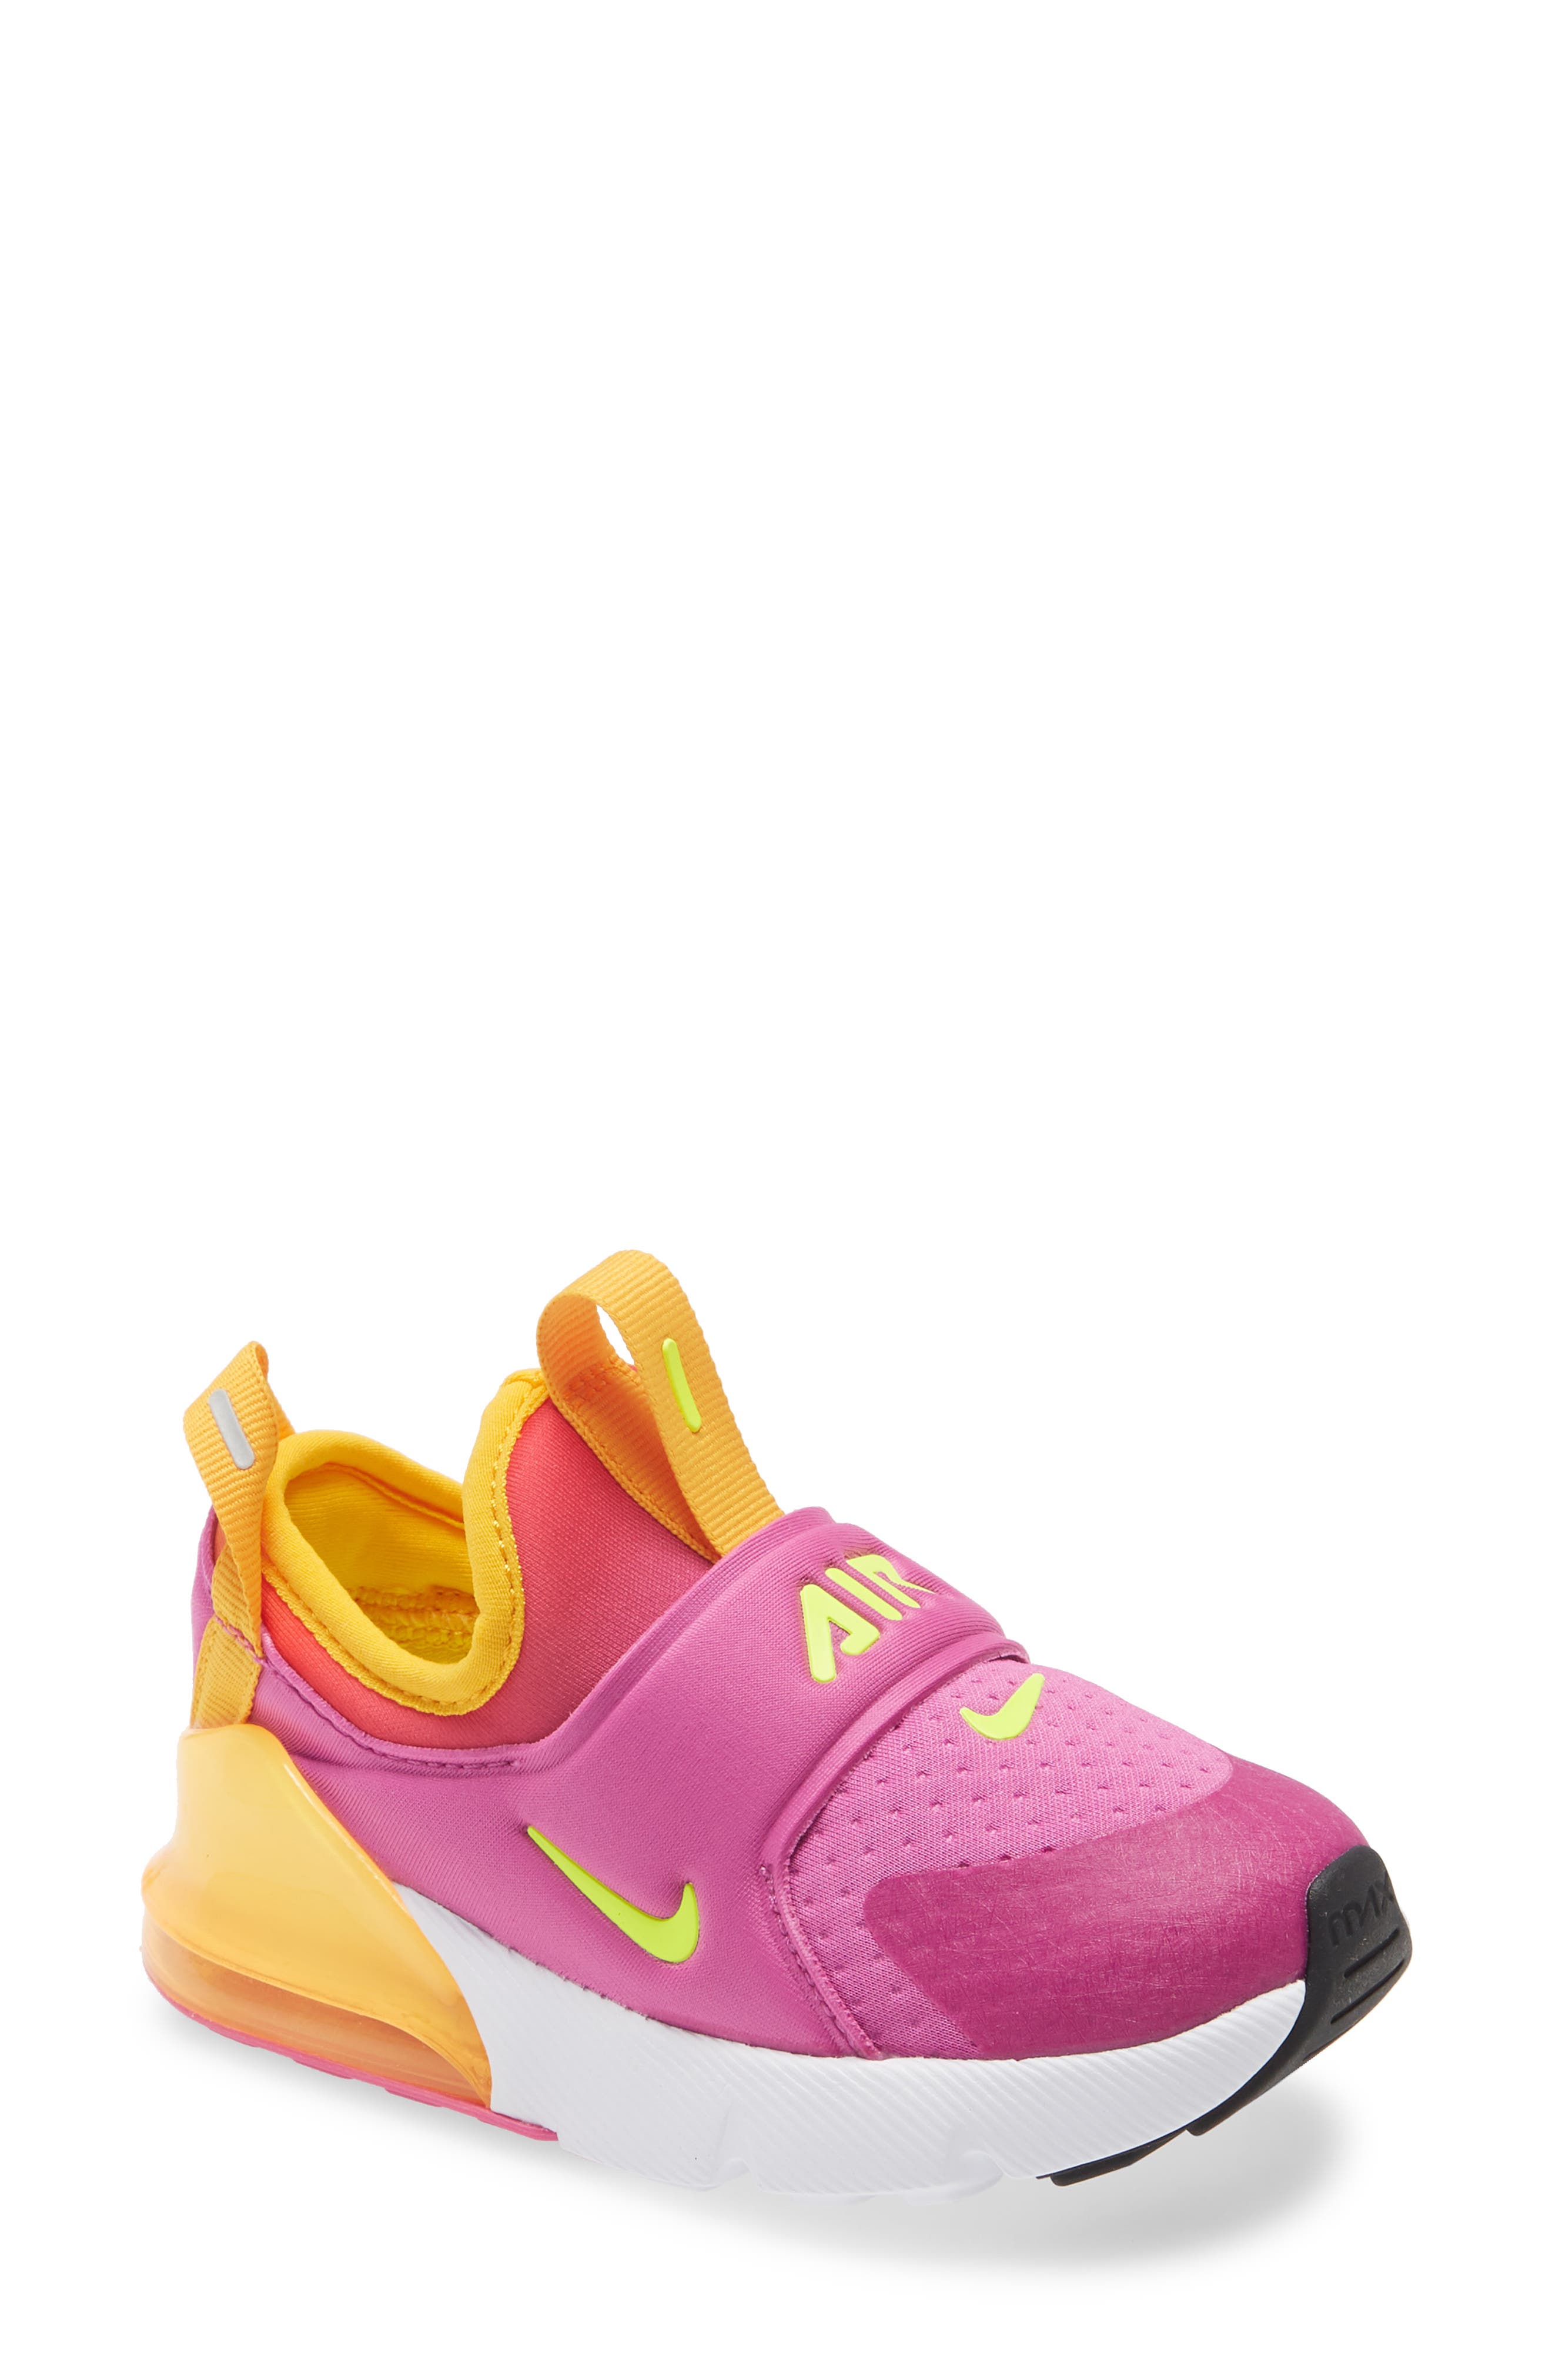 nike rainbow toddler shoes